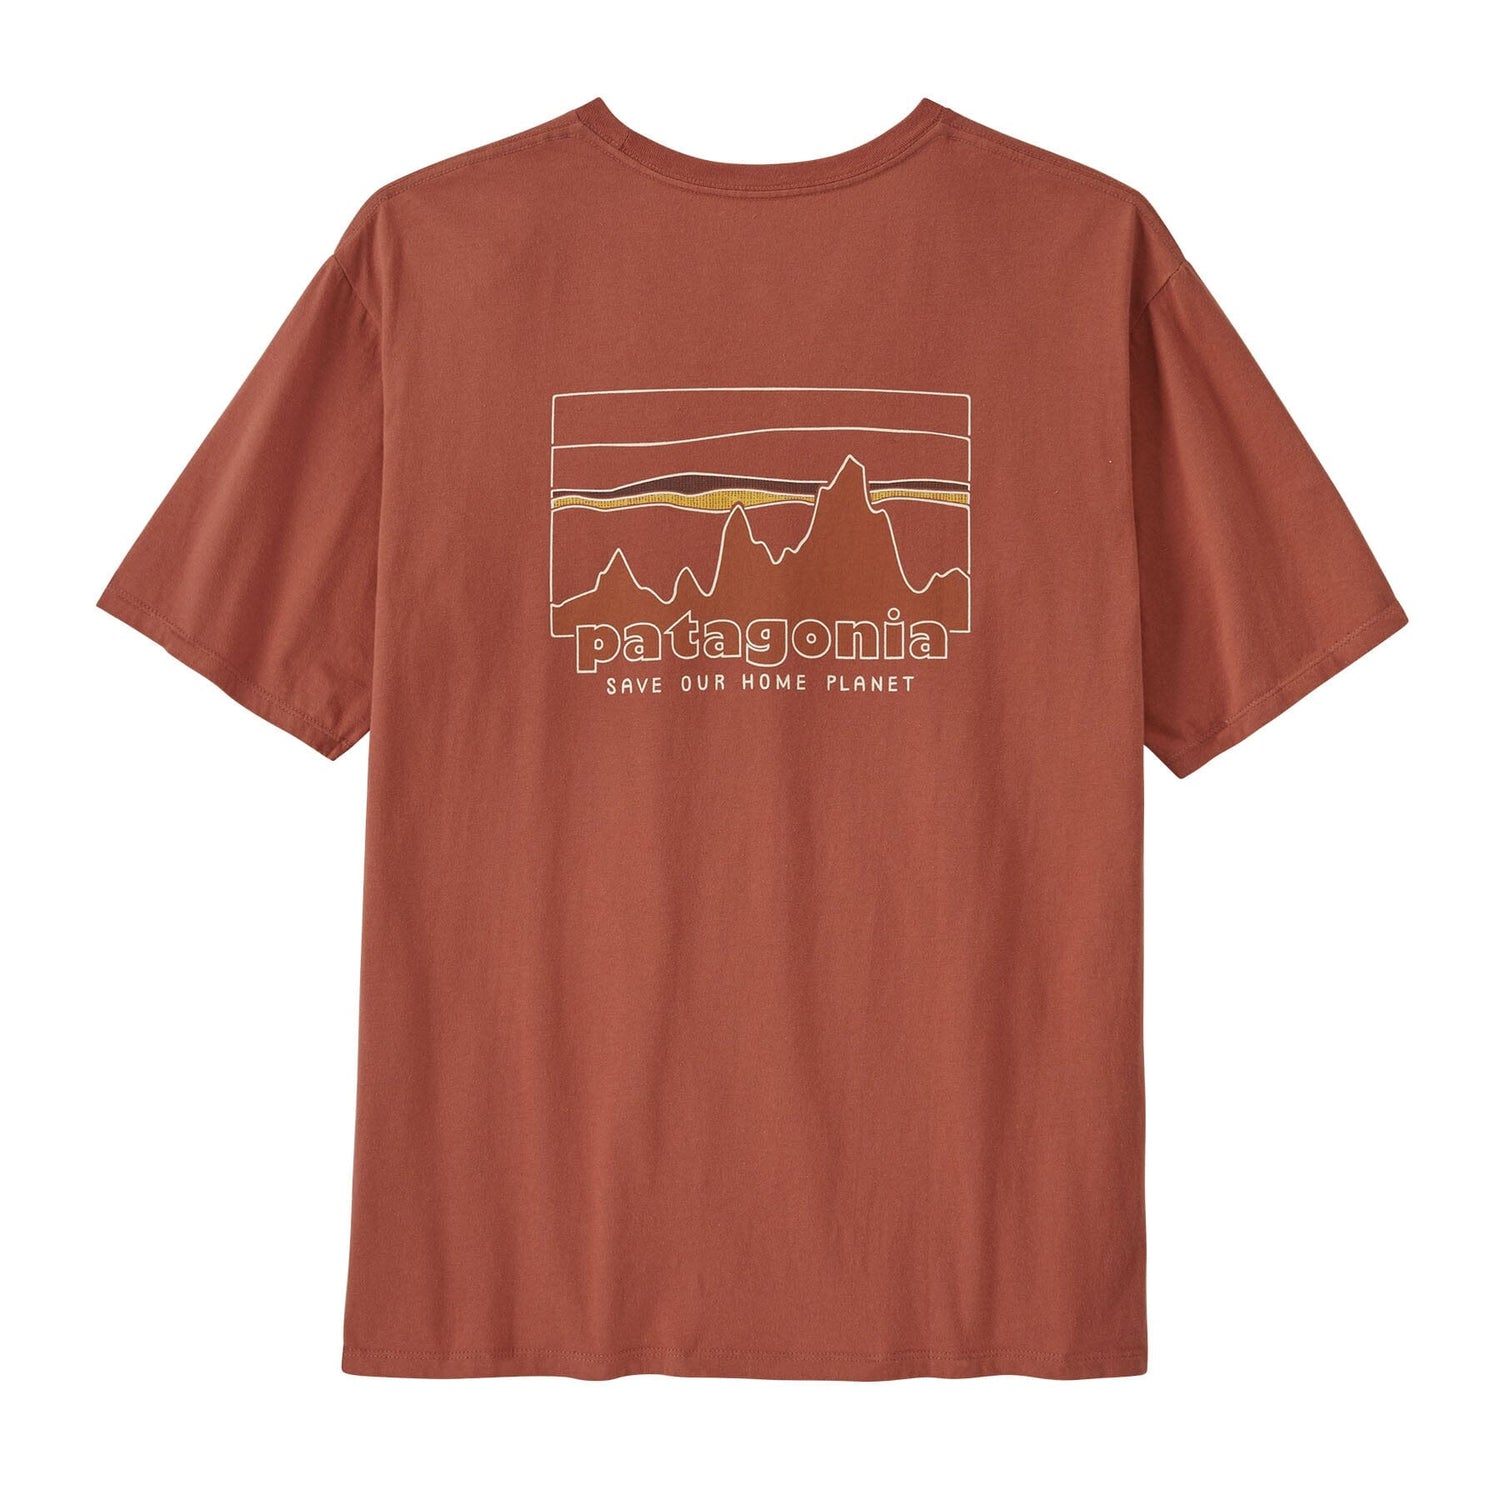 Patagonia M's '73 Skyline Organic T-Shirt - 100% Organic Cotton Burl Red Shirt